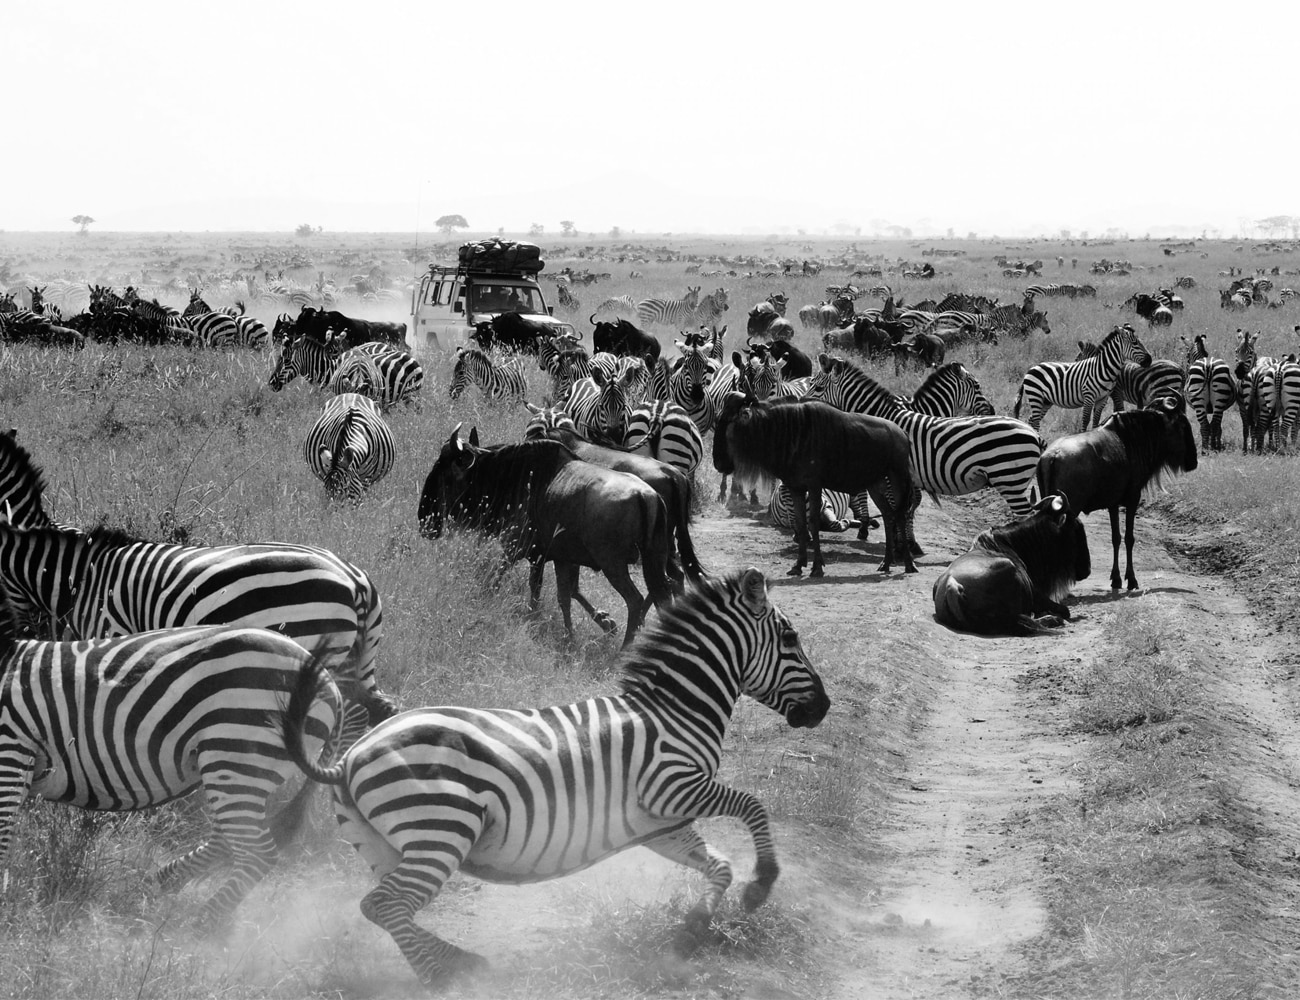 Tours at The Serengeti National Park